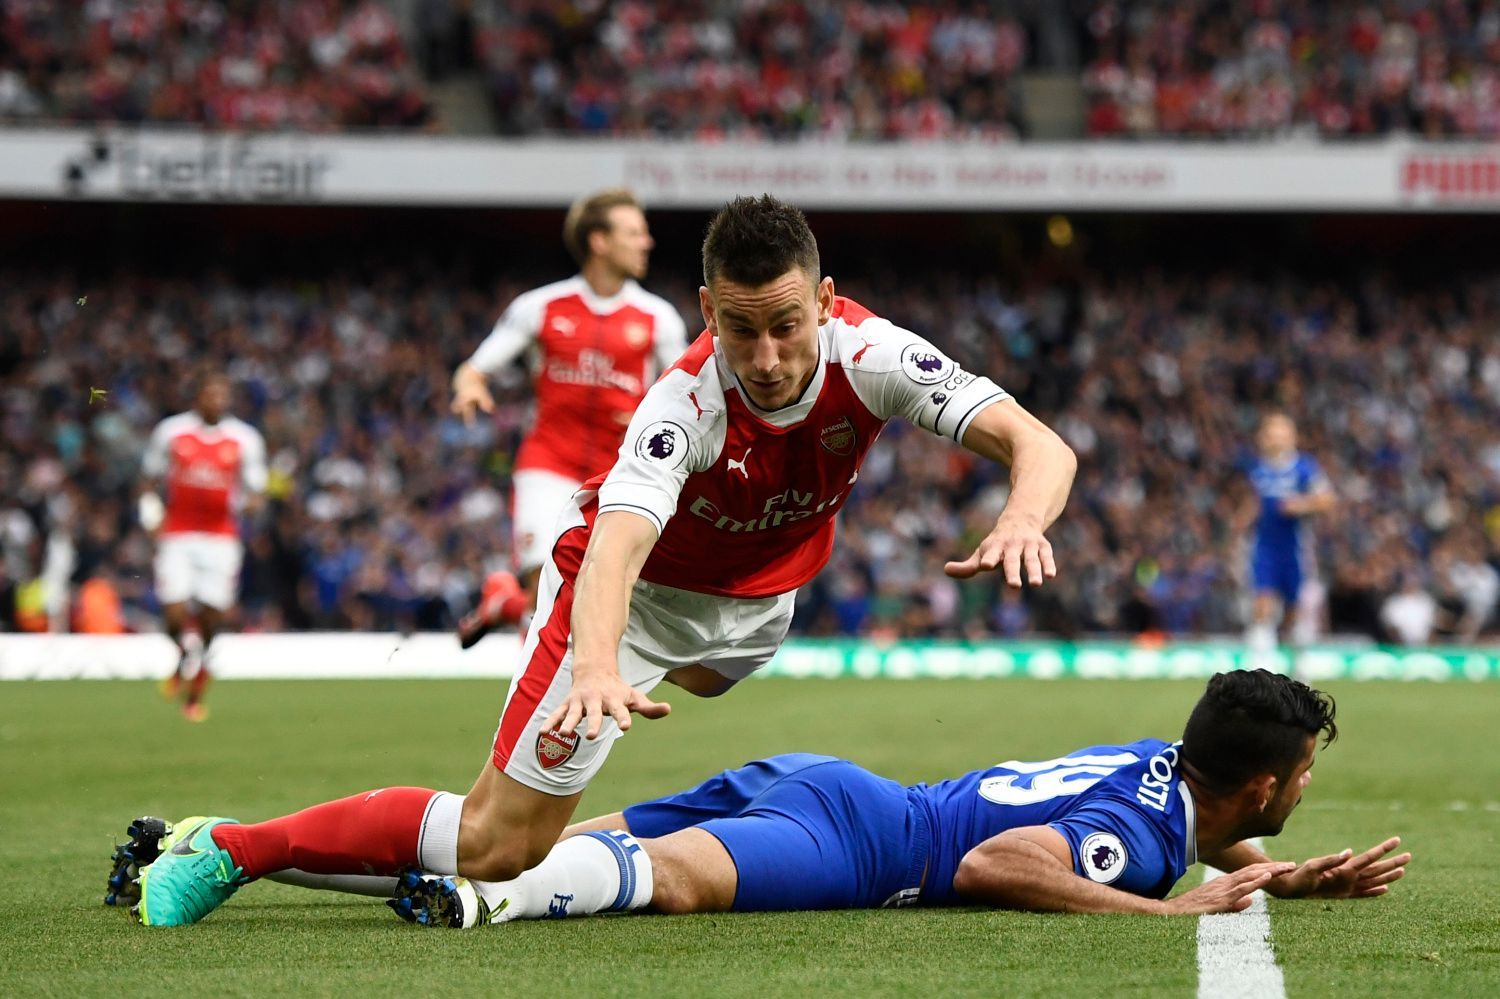 PL, Arsenal-Chelsea: Laurent Koscielny - Diego Costa